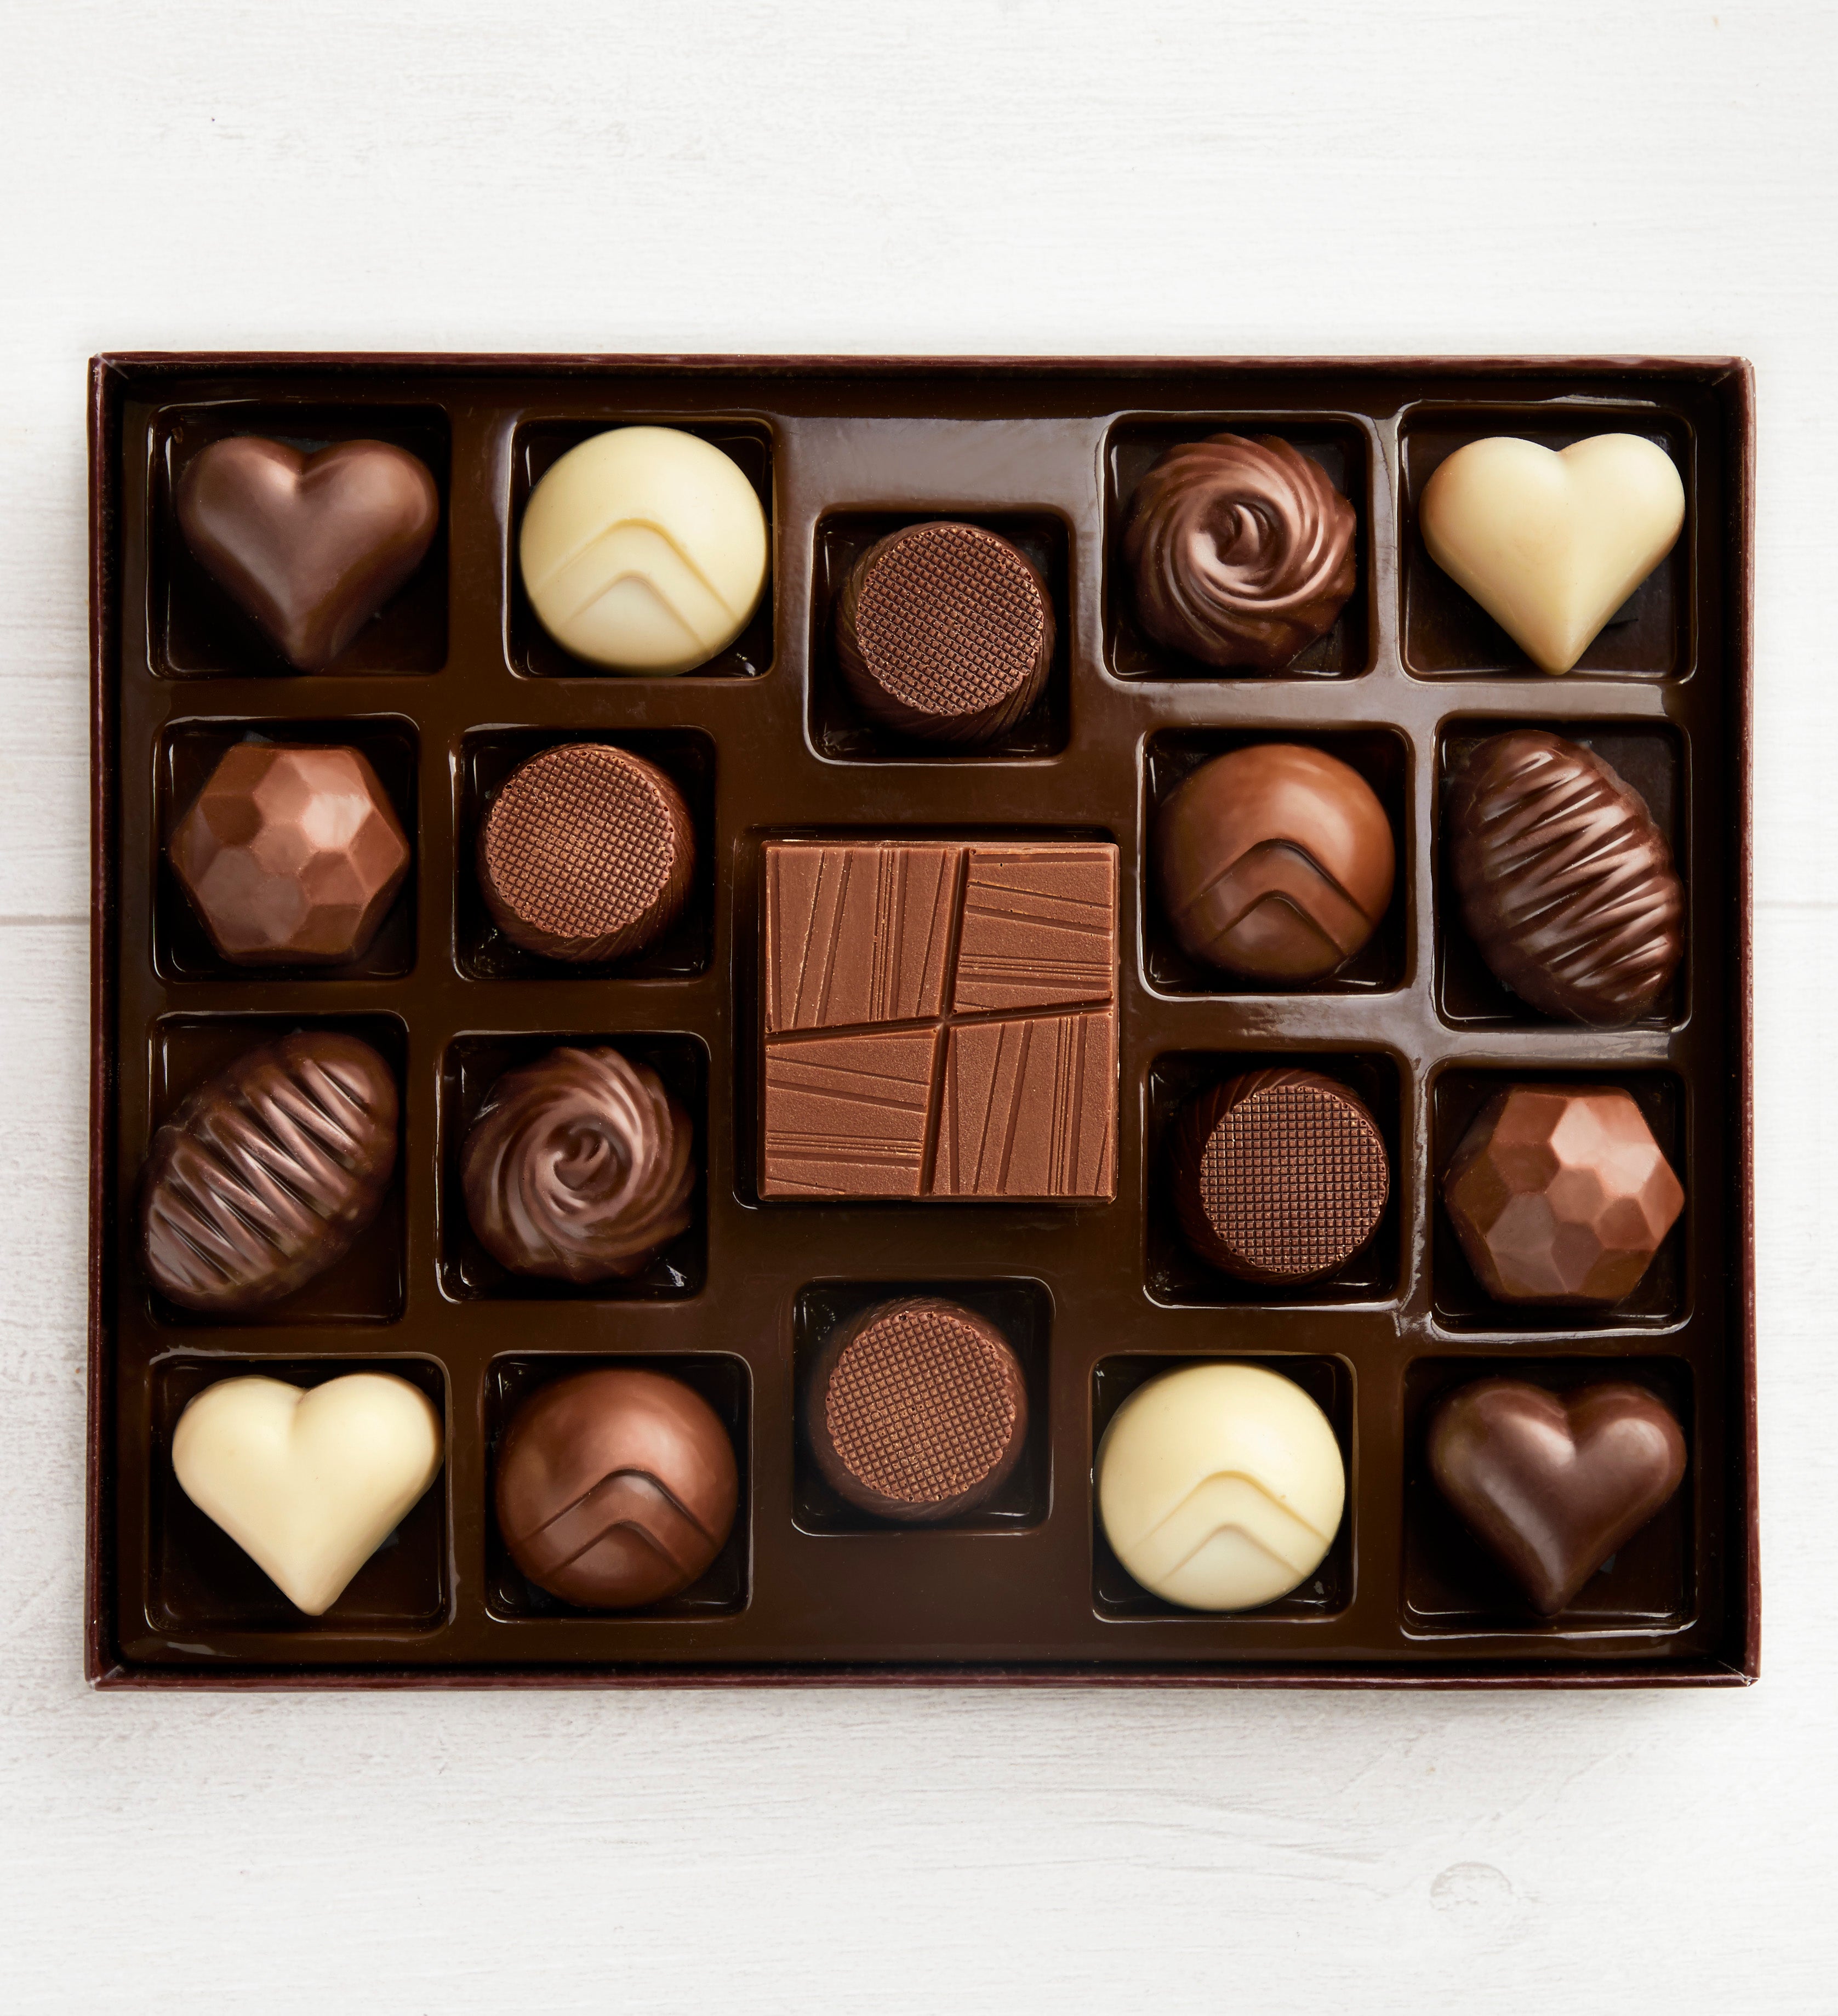 Hearts Design 19pc Chocolate Box